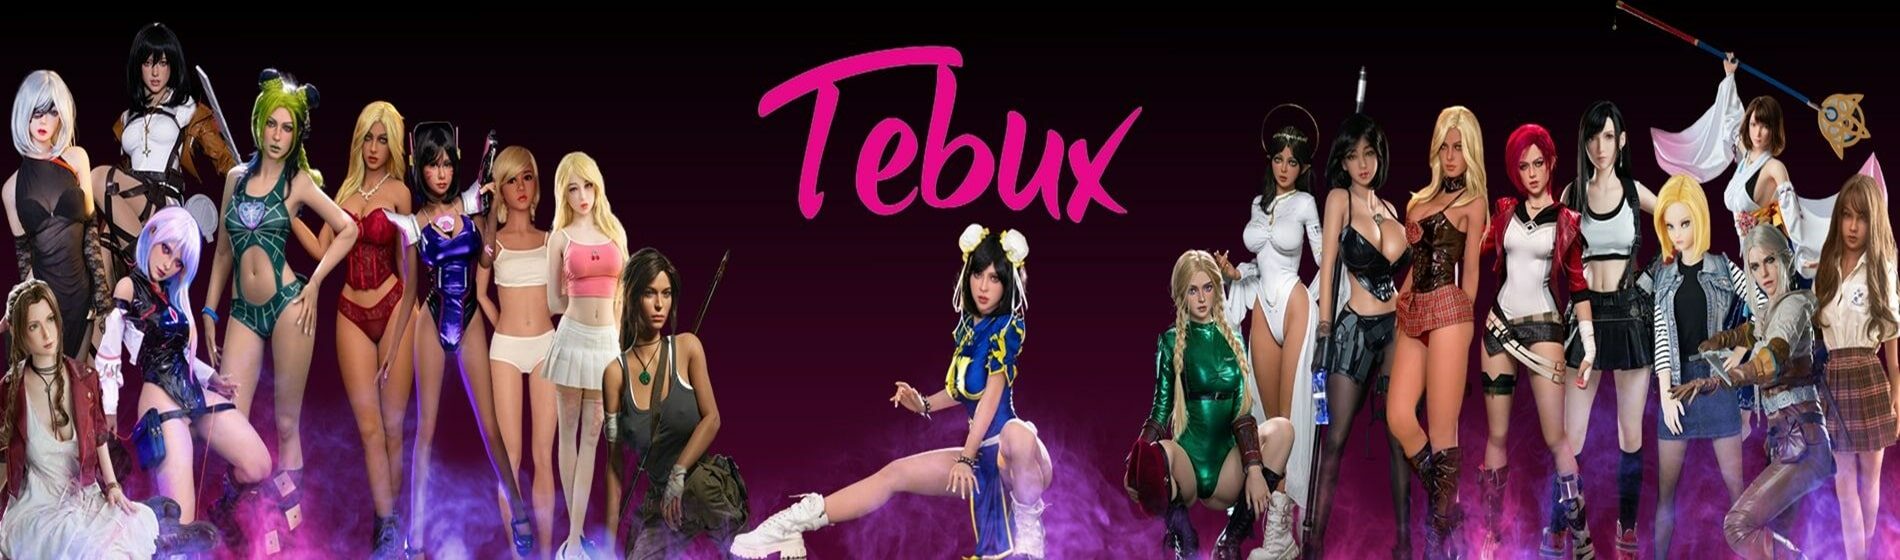 Tebux Banner